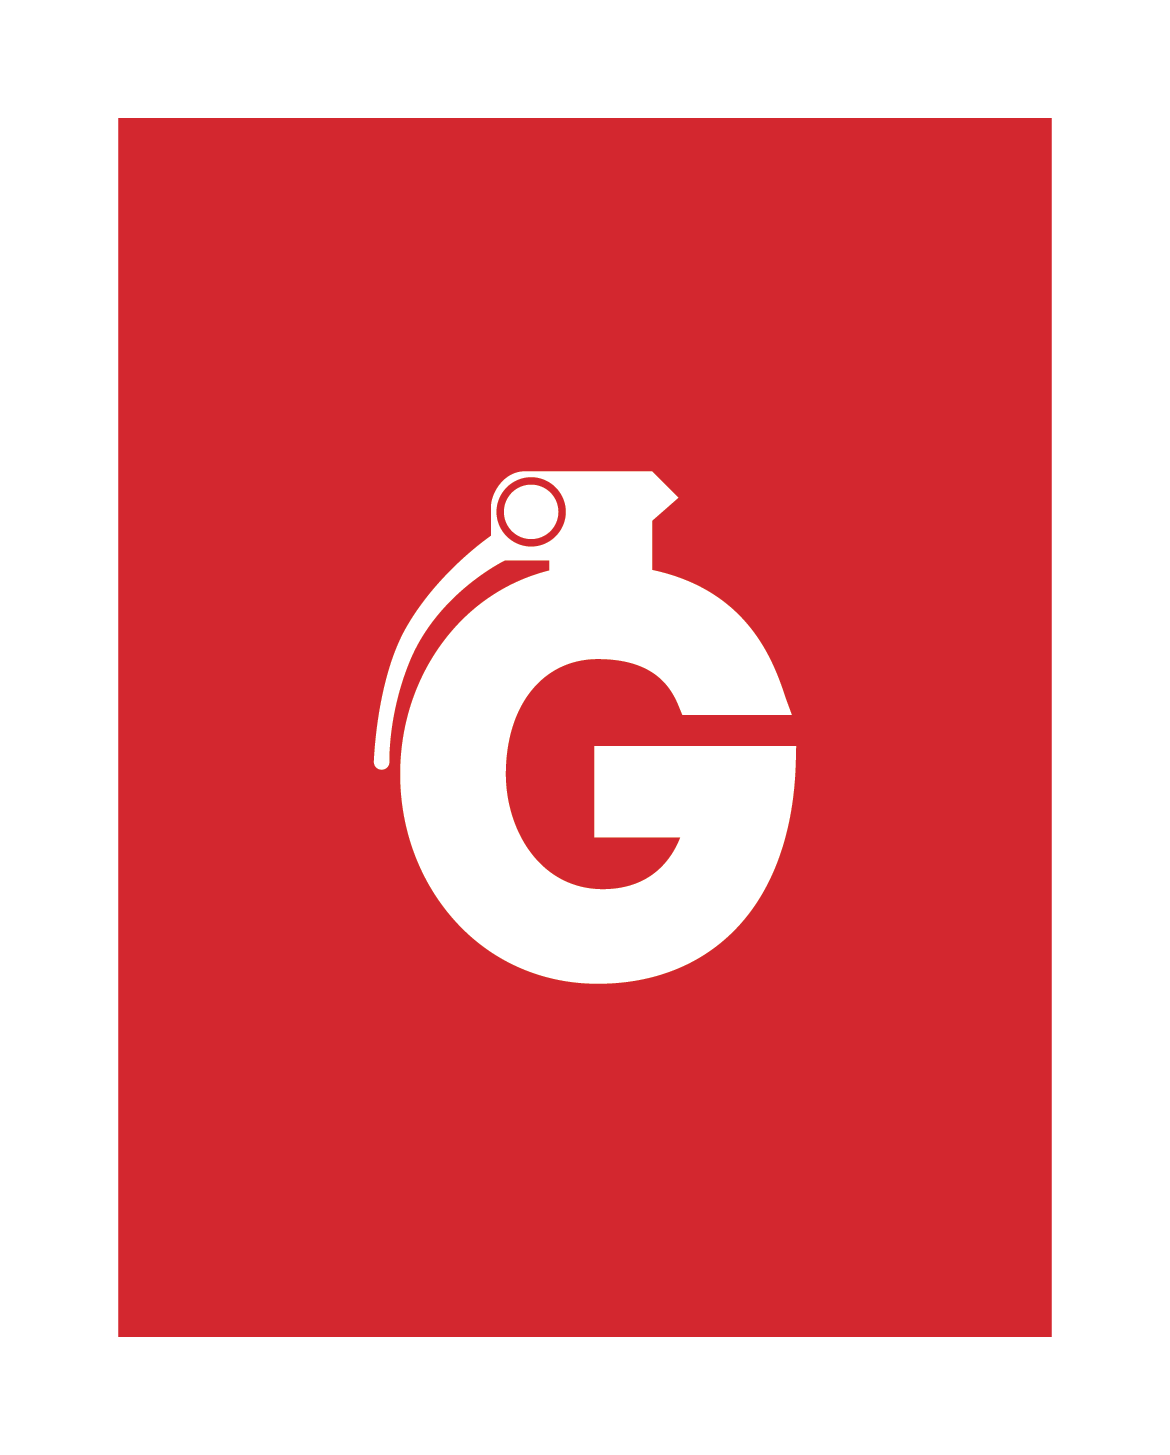 Granada Logo - Granada. logo. Logos design, Logo concept, Minimal logo